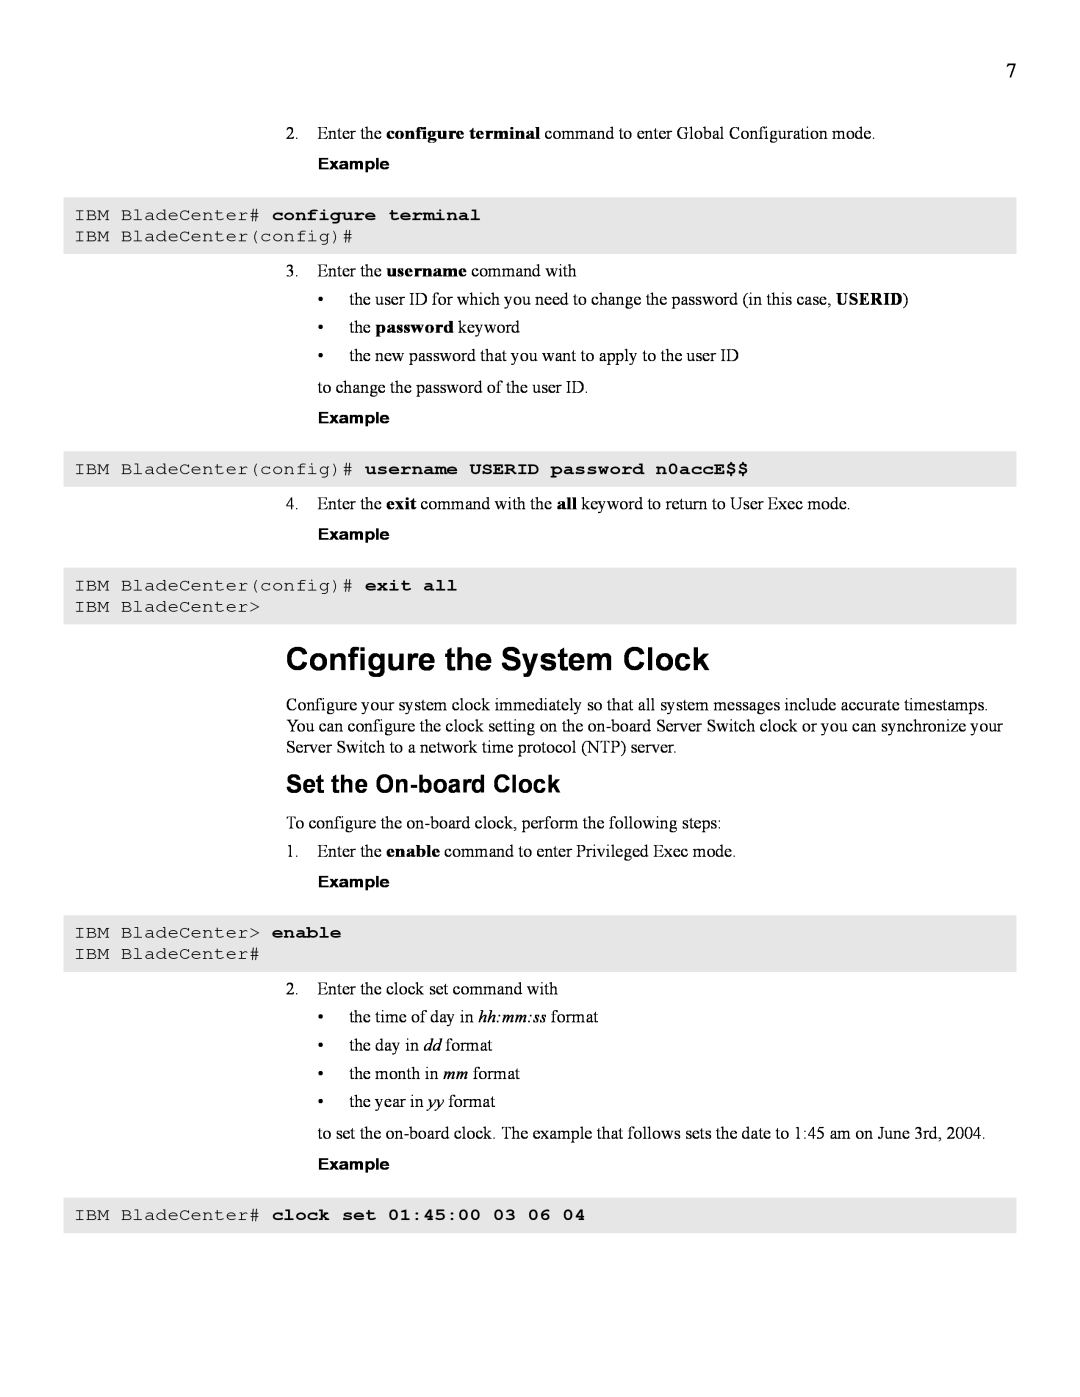 IBM 24R9718 IB manual Configure the System Clock, Set the On-board Clock, IBM BladeCenter# configure terminal 